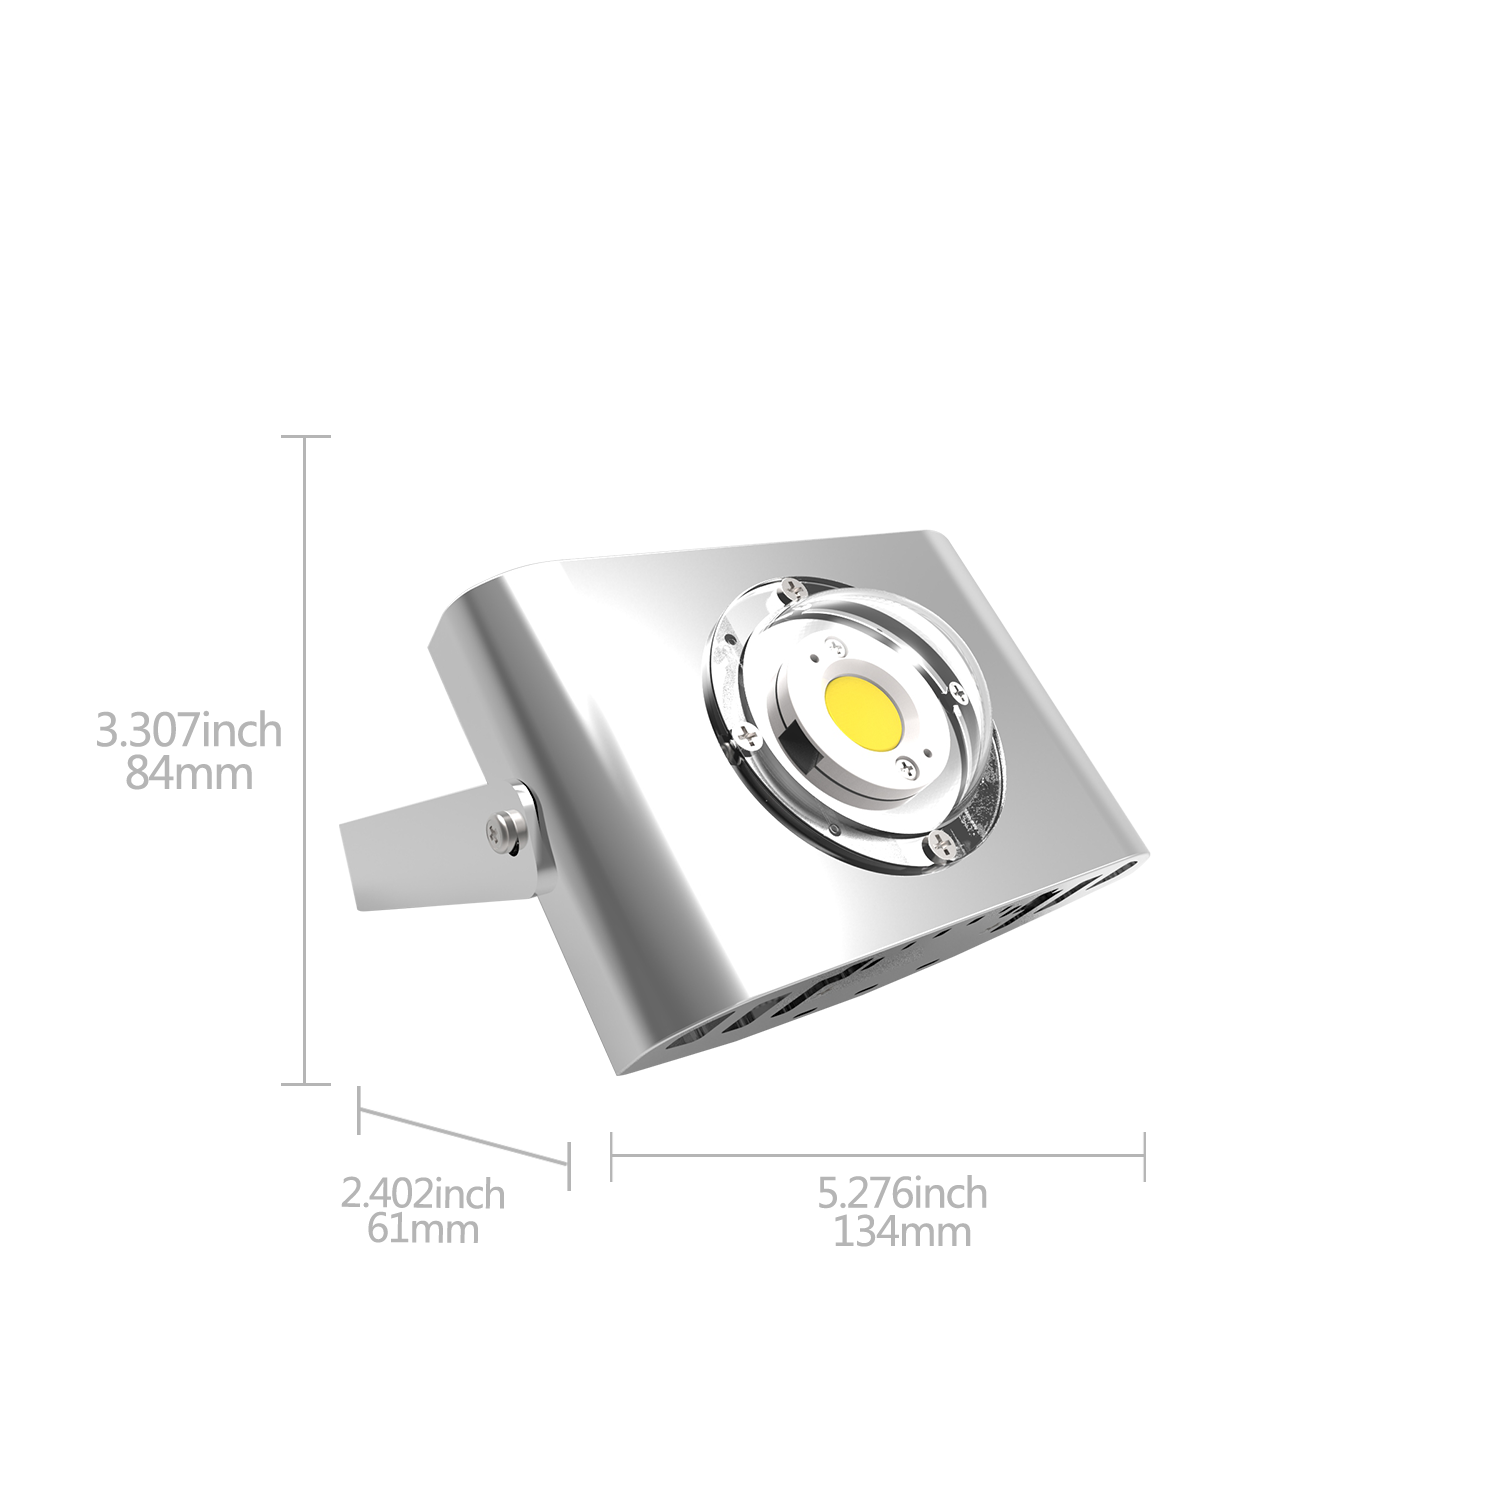 Aigostar - Confezione da 2 Faretto a LED COB，10W, 850LM，Impermeabile IP65, Luce Naturale 4000K[Classe di efficienza energetica A+]